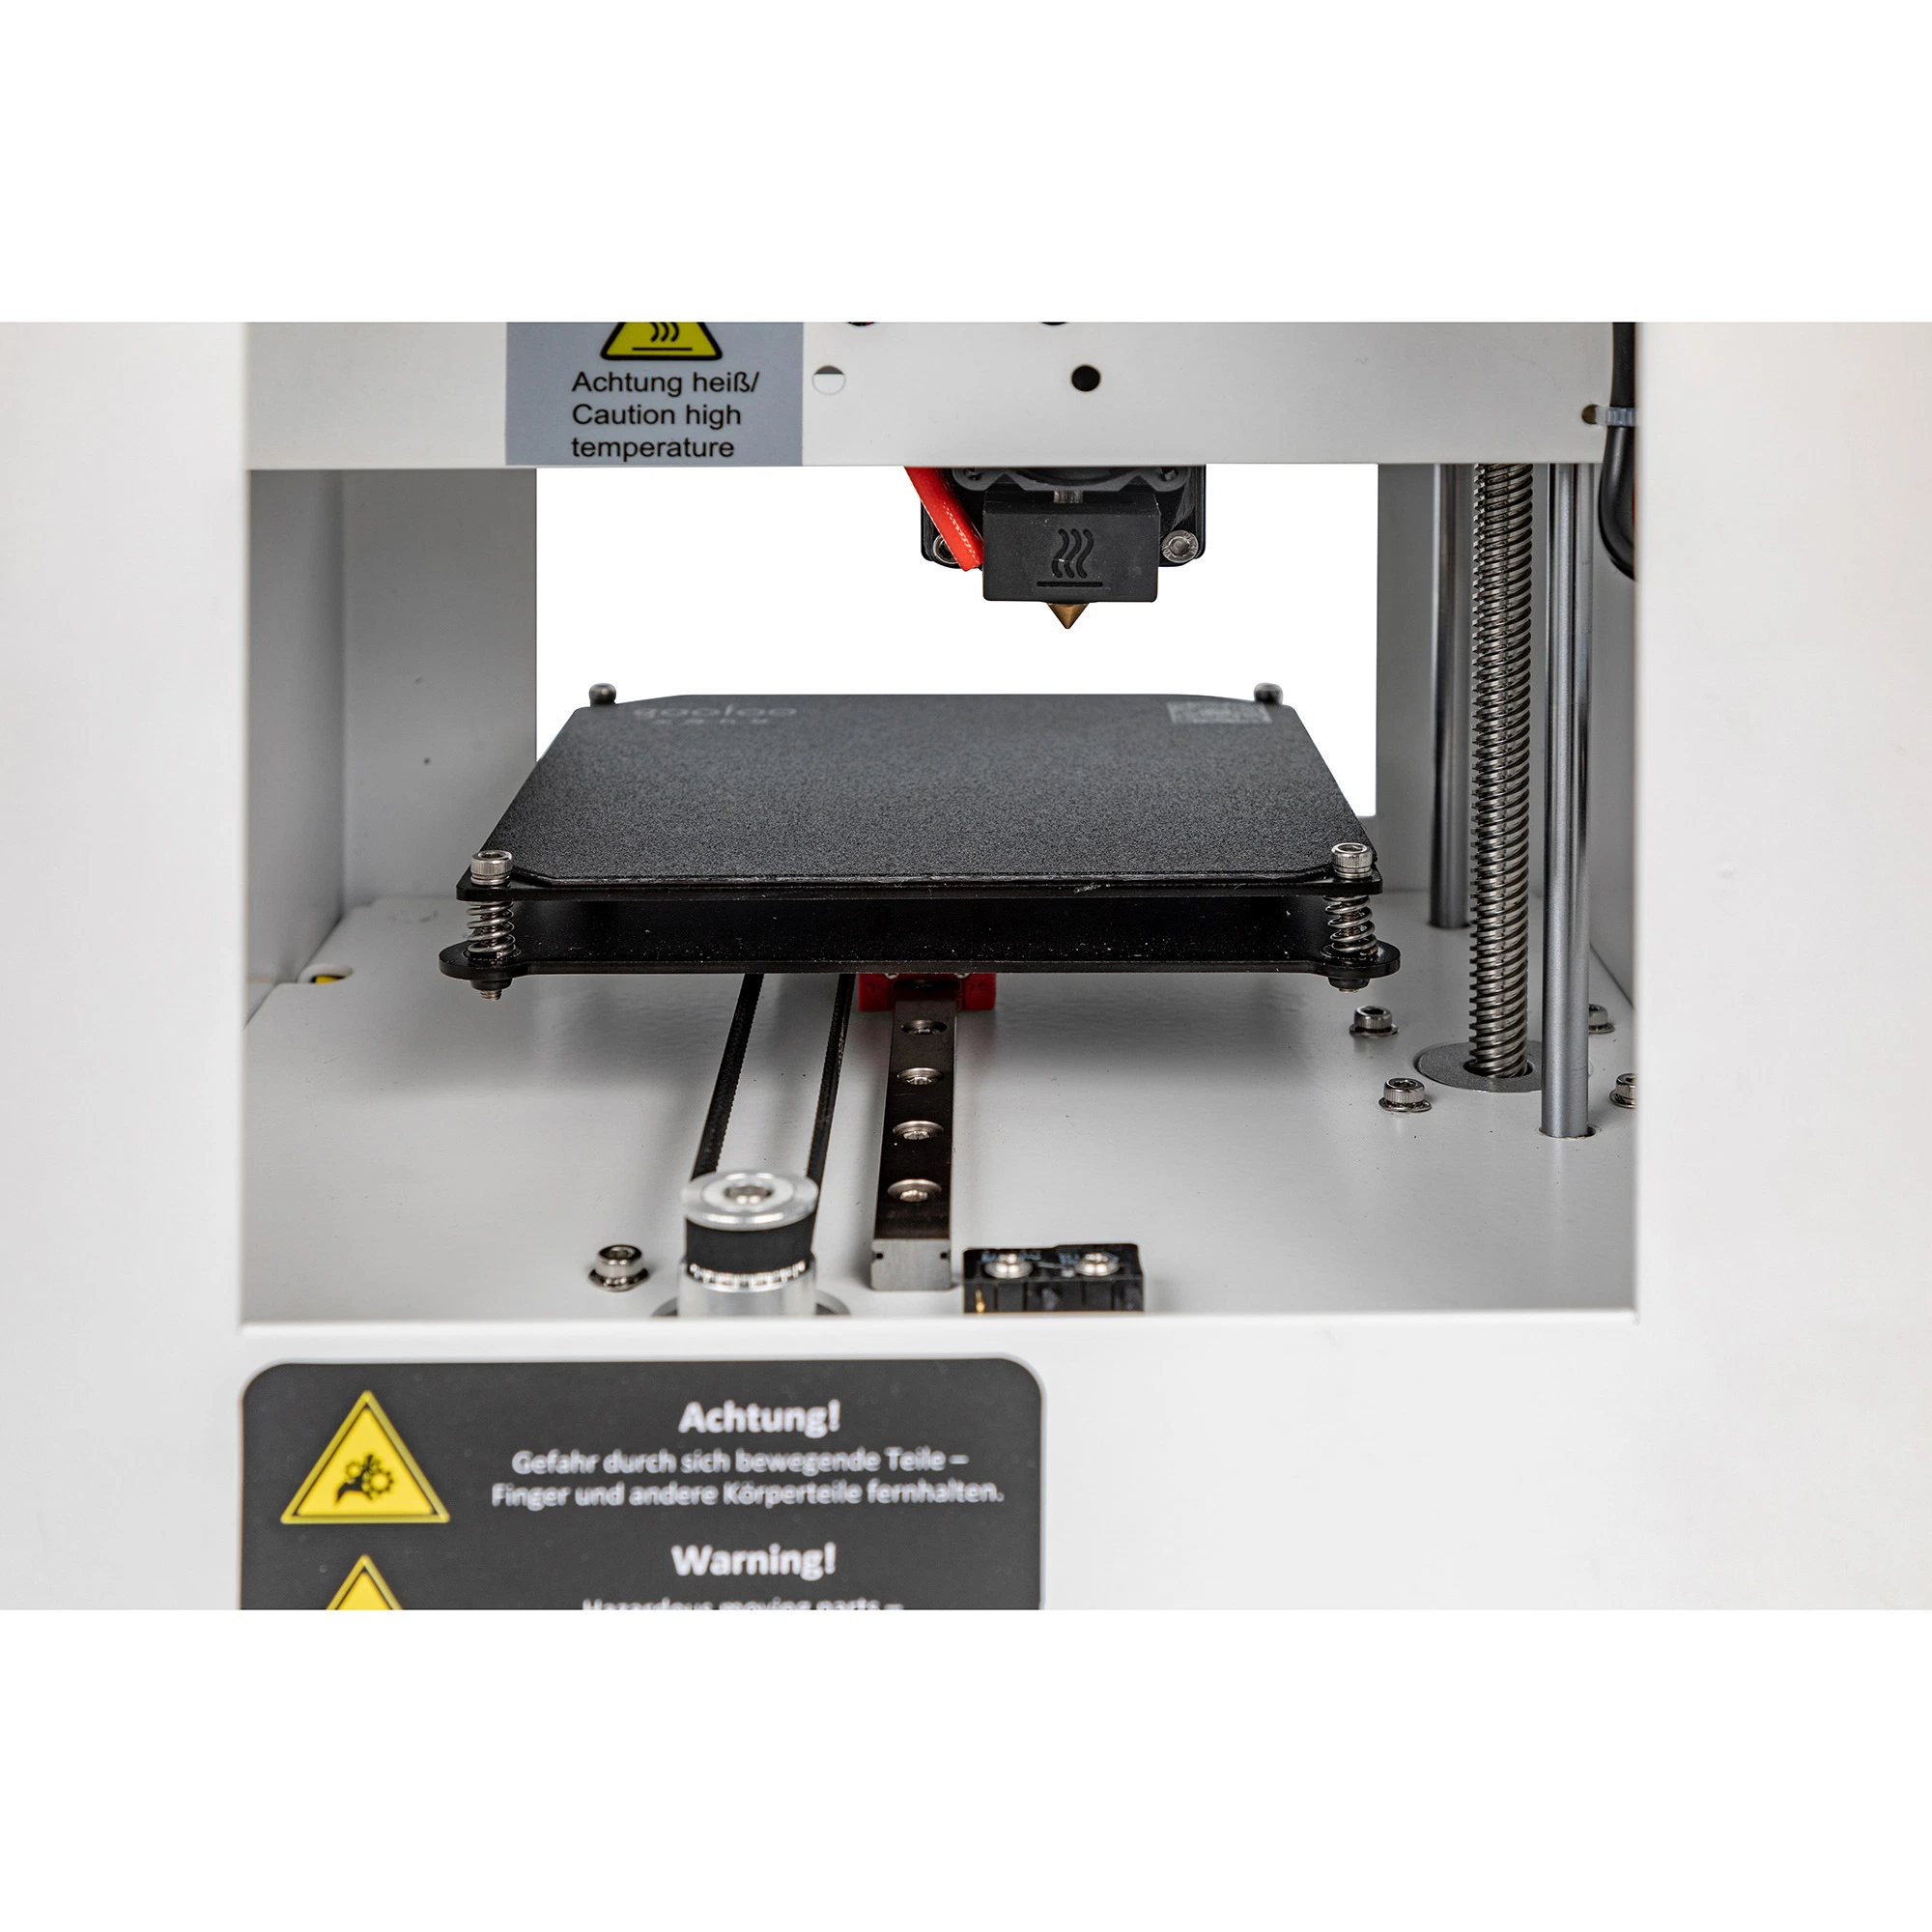 Goofoo OEM ODM Mini Desktop Fdm 3D Printer with 100*100*100mm Build Volume and Removable Magnet Mat for 1.75mm 3D Filament Printing Machine